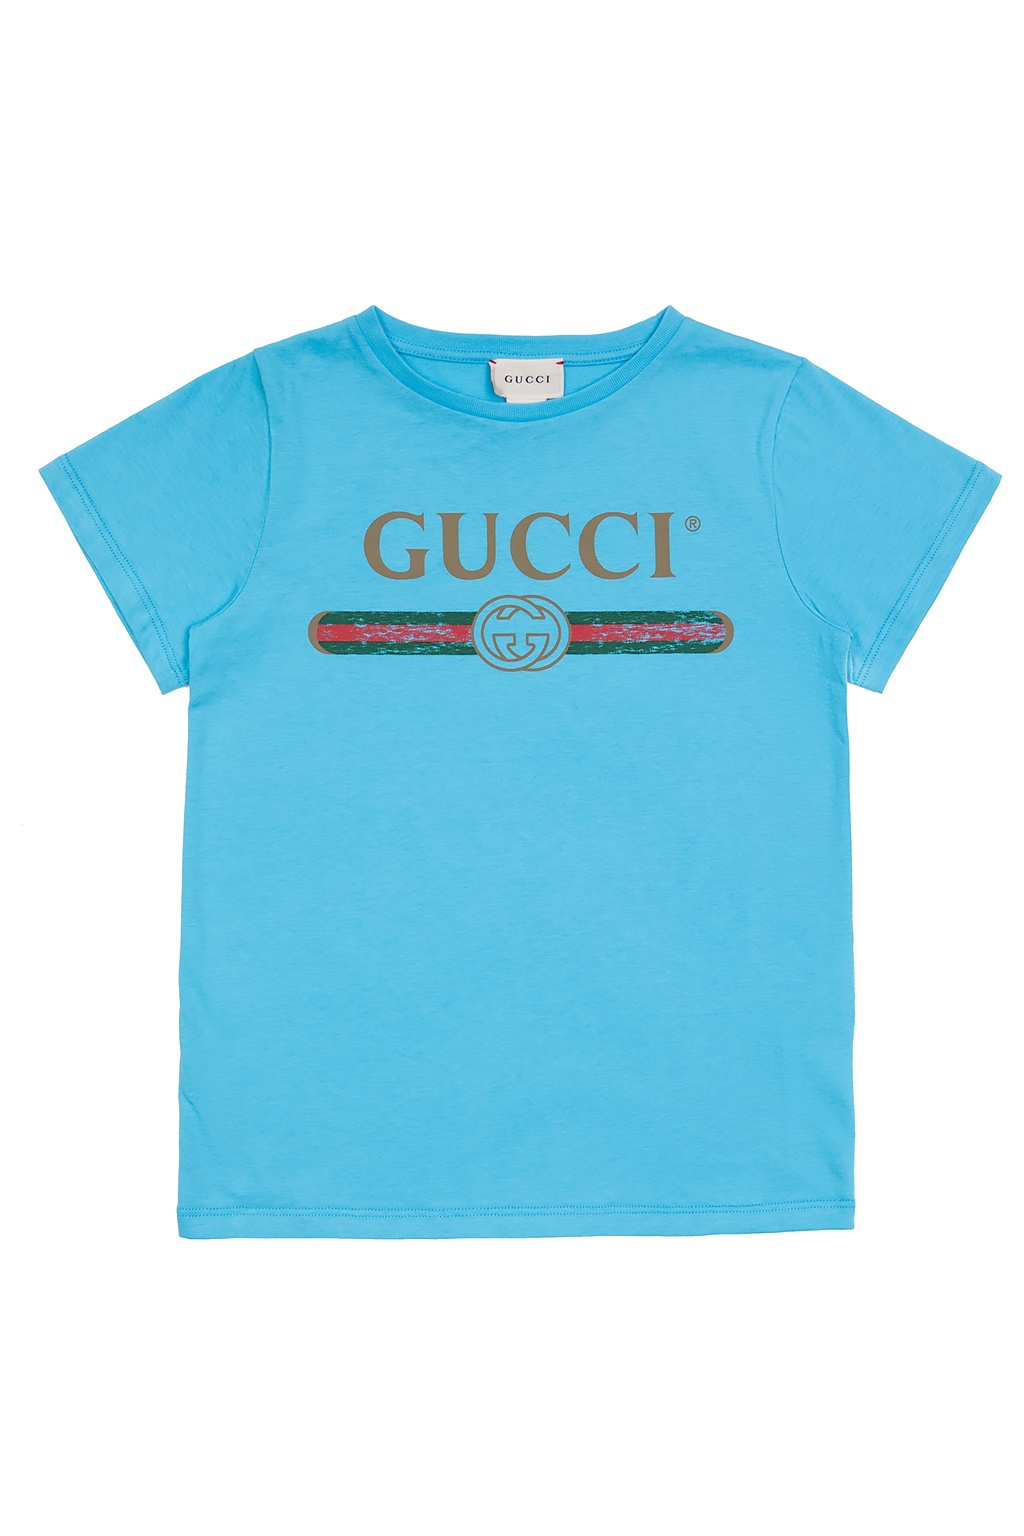 gucci child t shirt